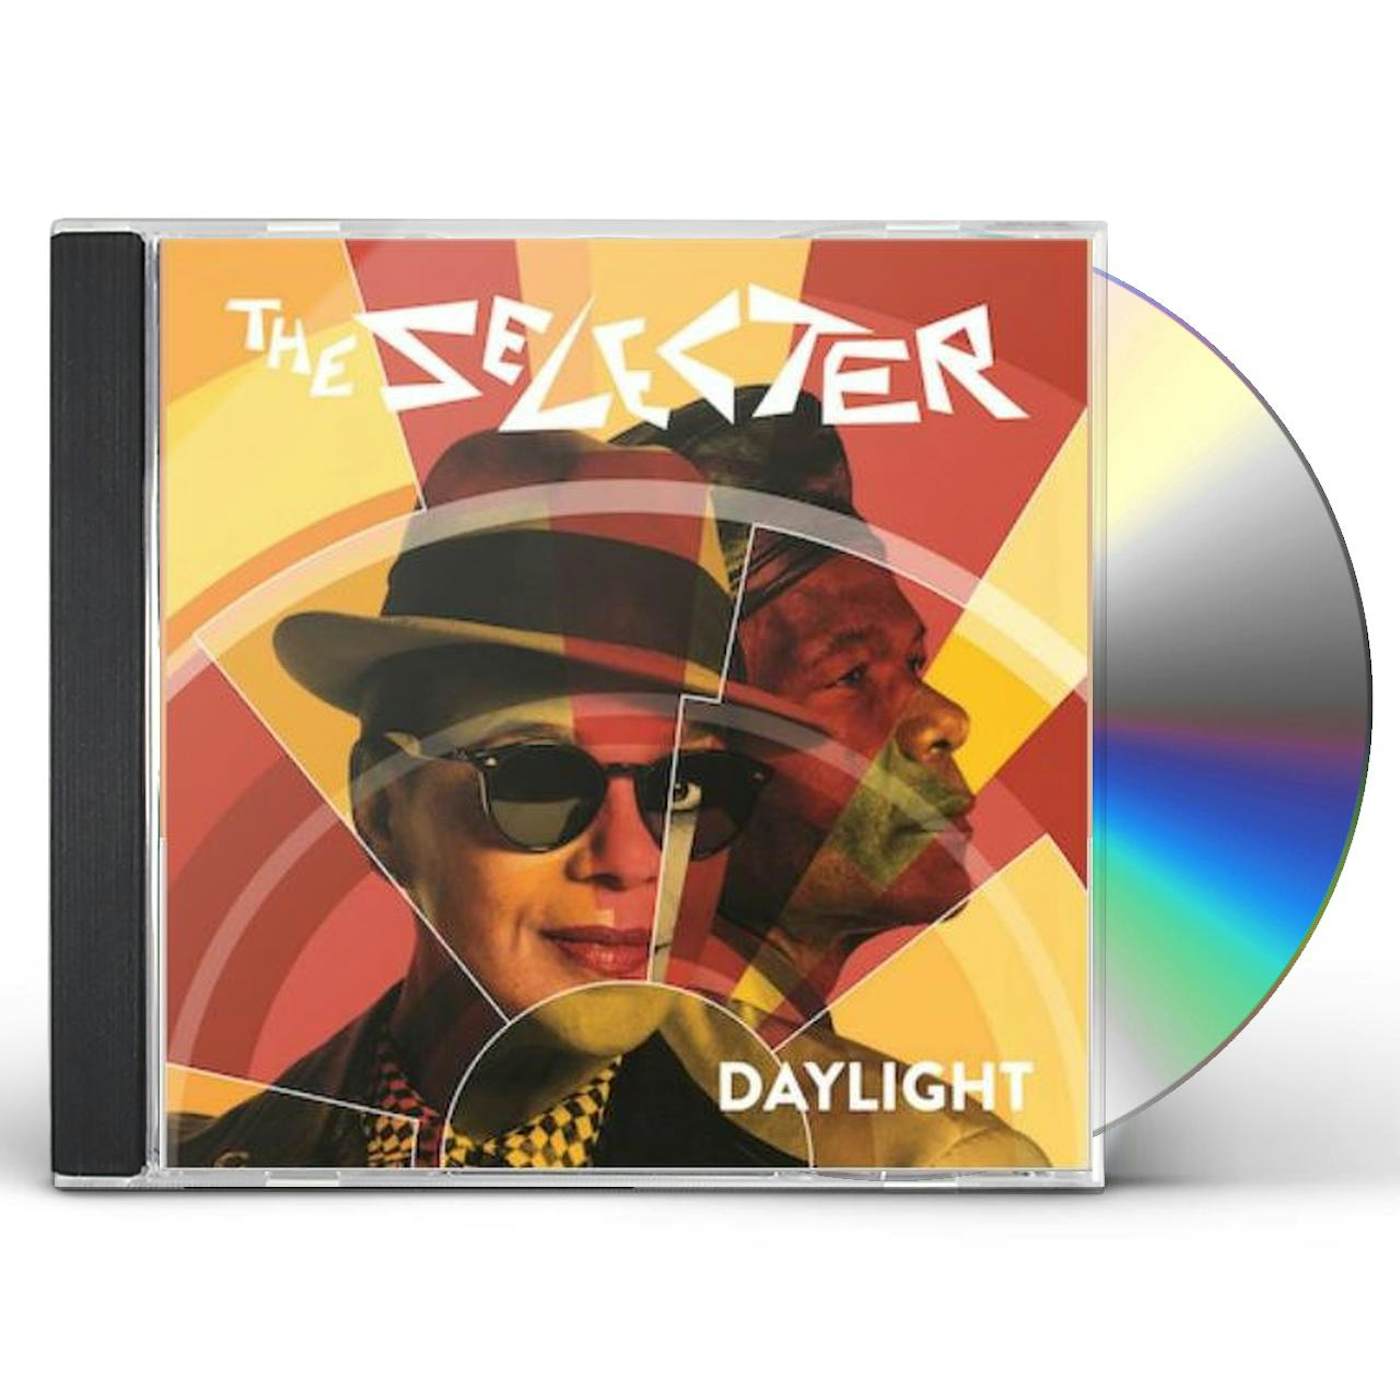 Selecter DAYLIGHT CD